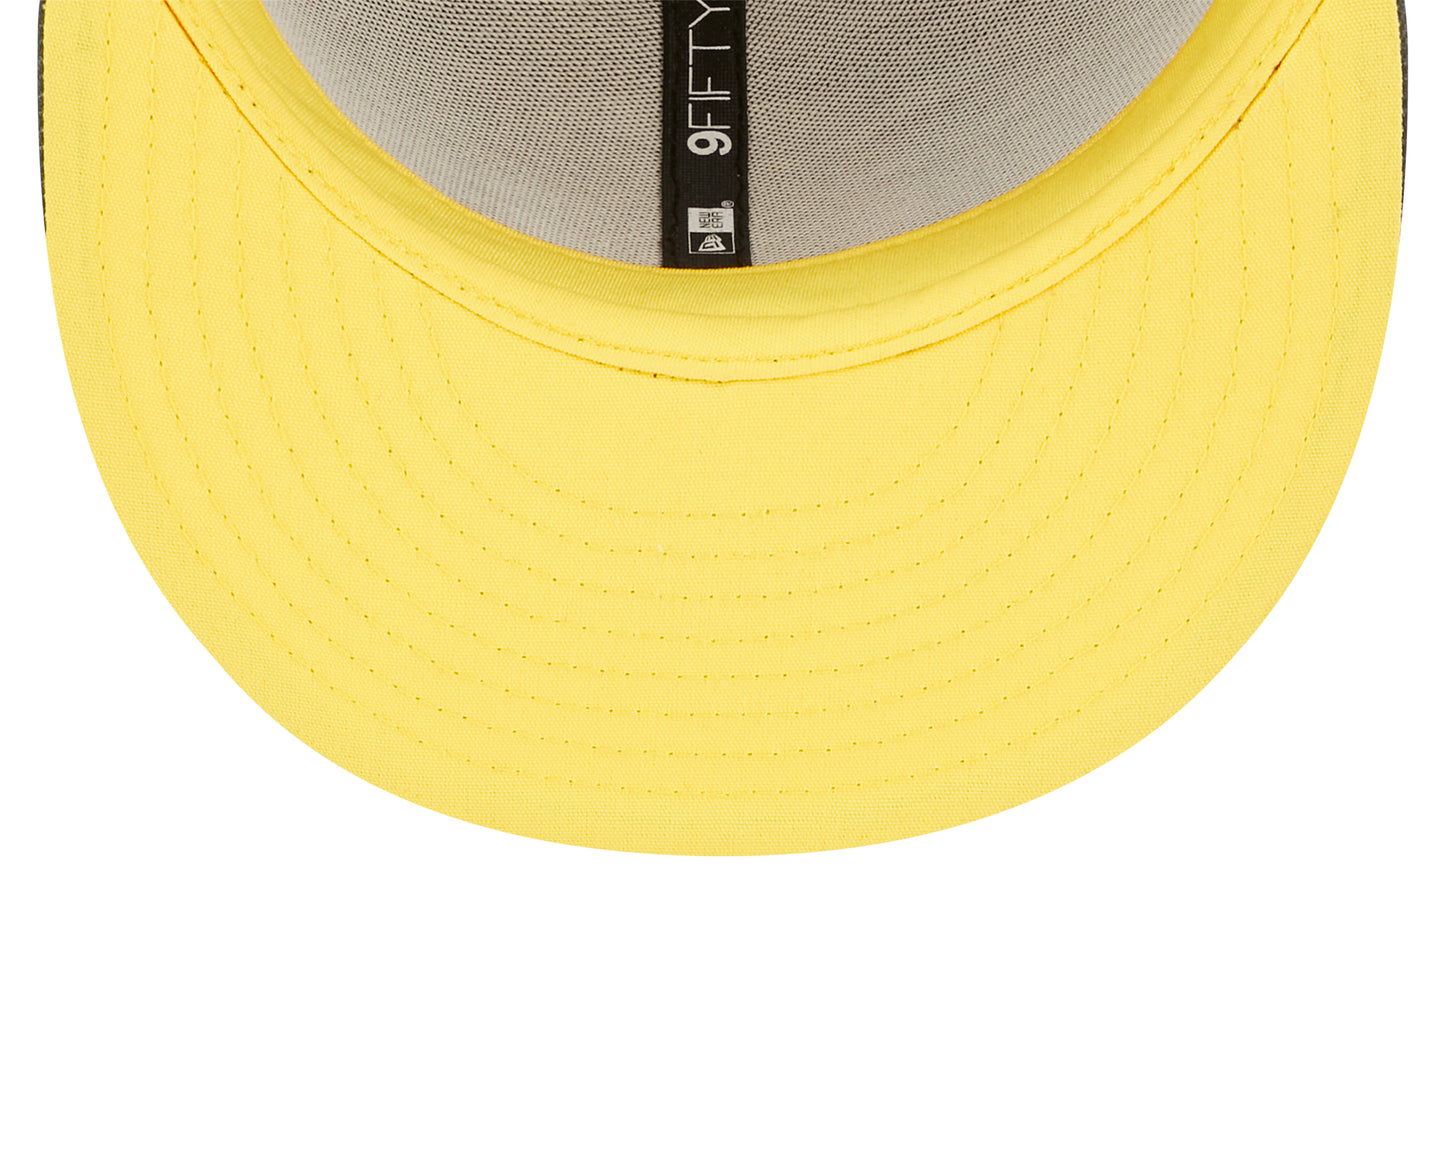 Mens Golden State Warriors New Era 2022 NBA City Edition 9FIFTY Snapback Hat